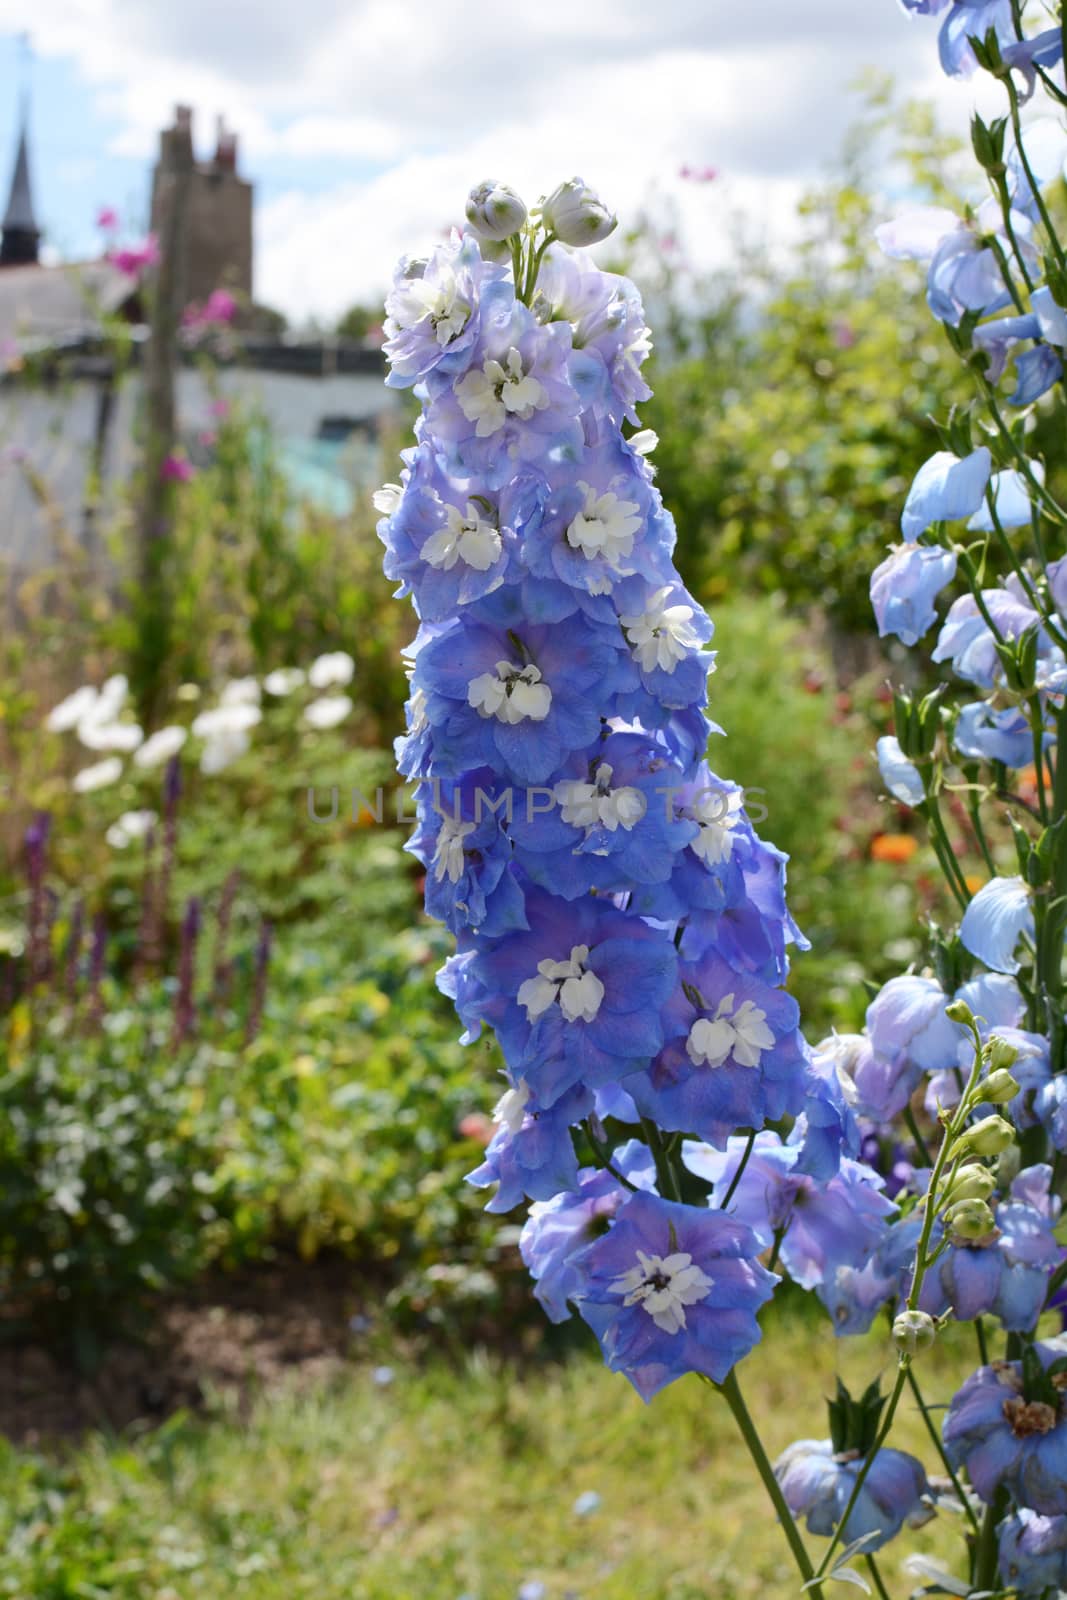 Light blue delphinium flowers against the background of a rural flower garden